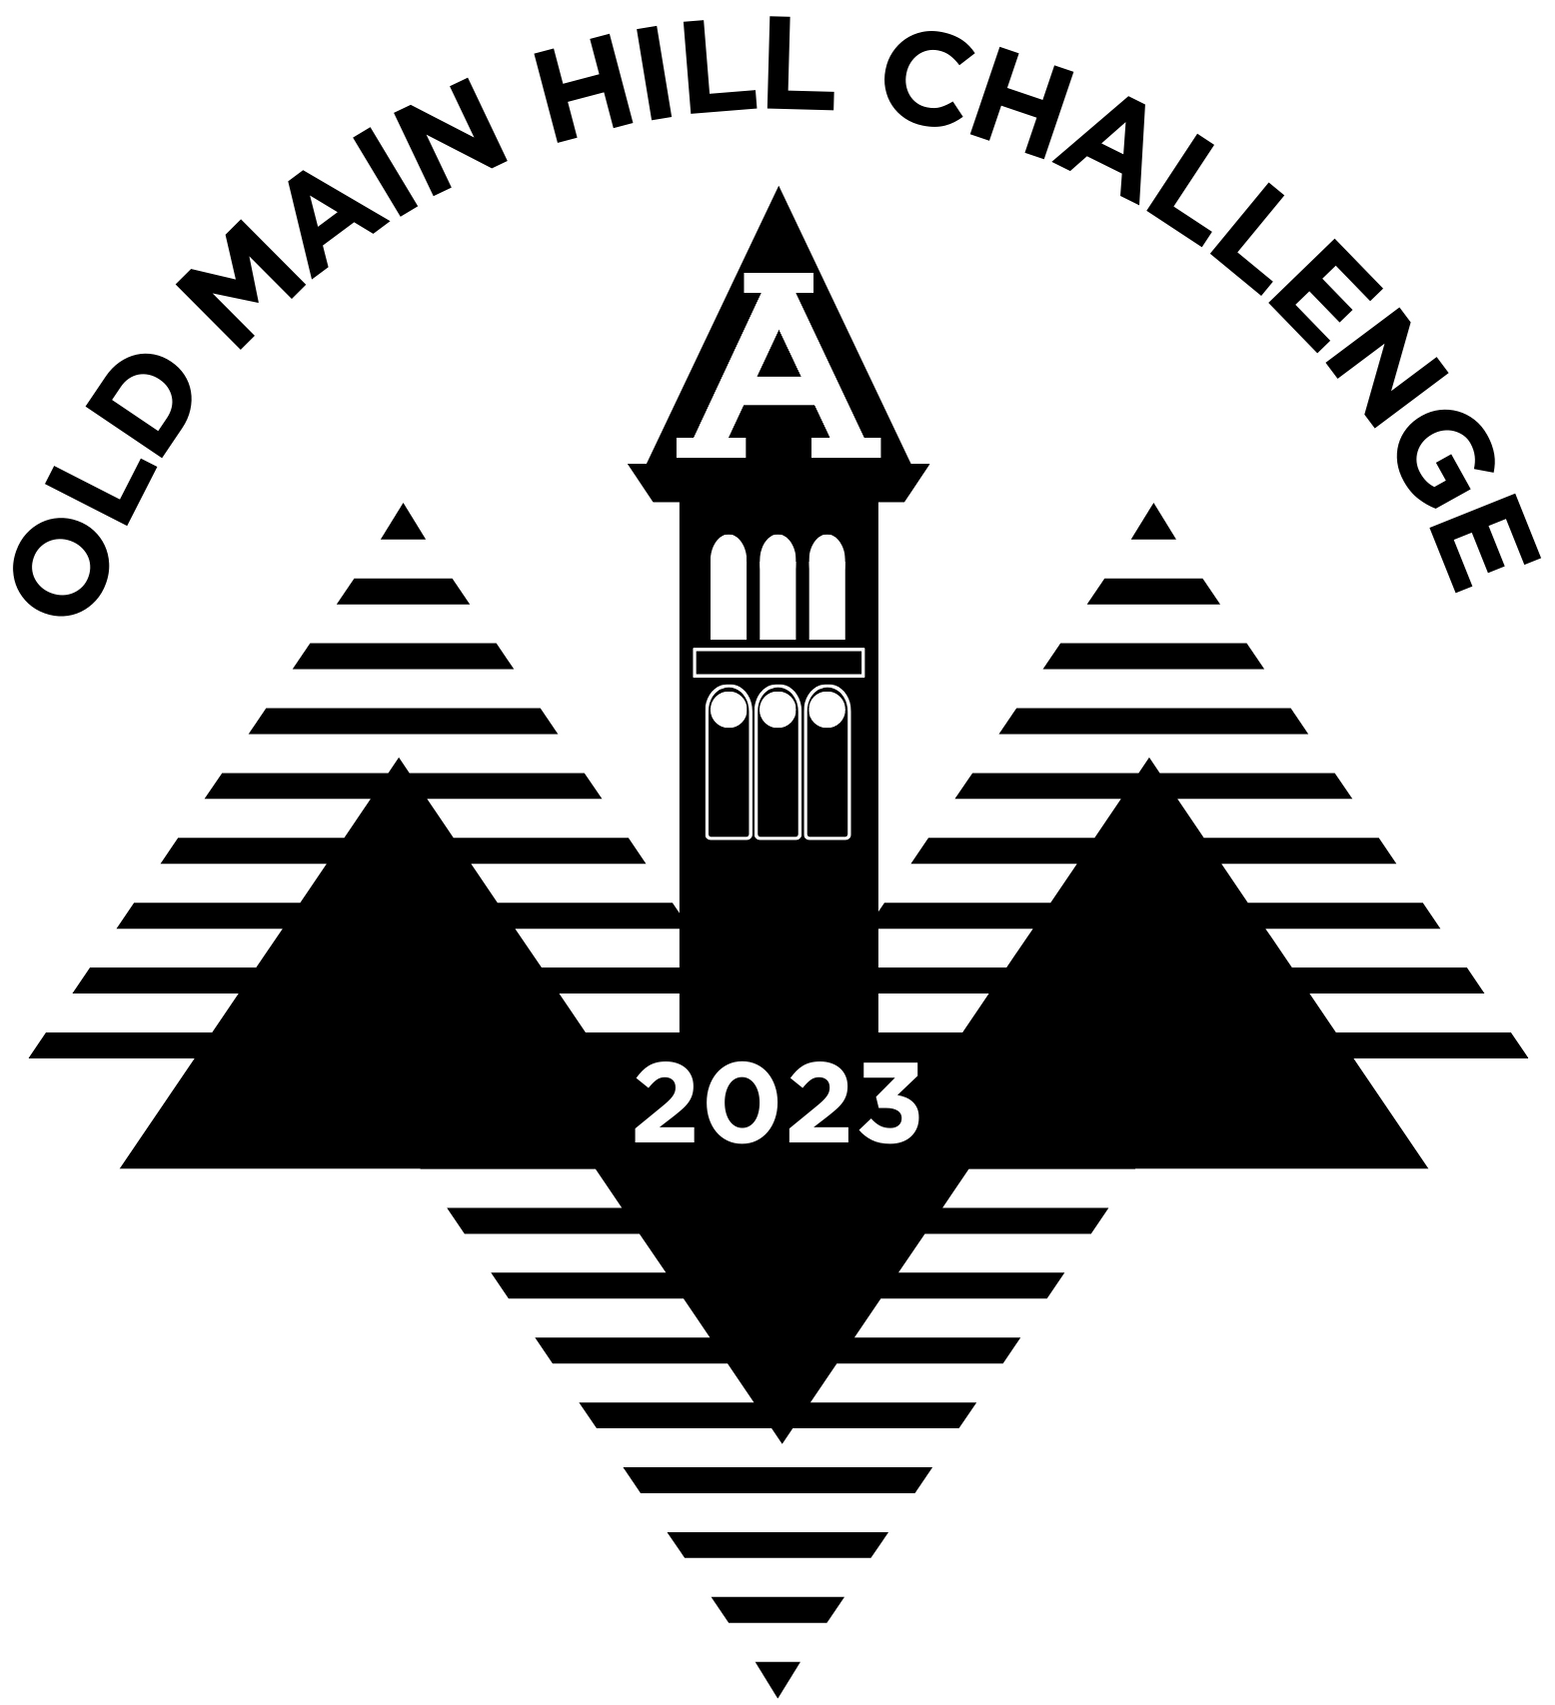 Old Main Hill Challenge logo